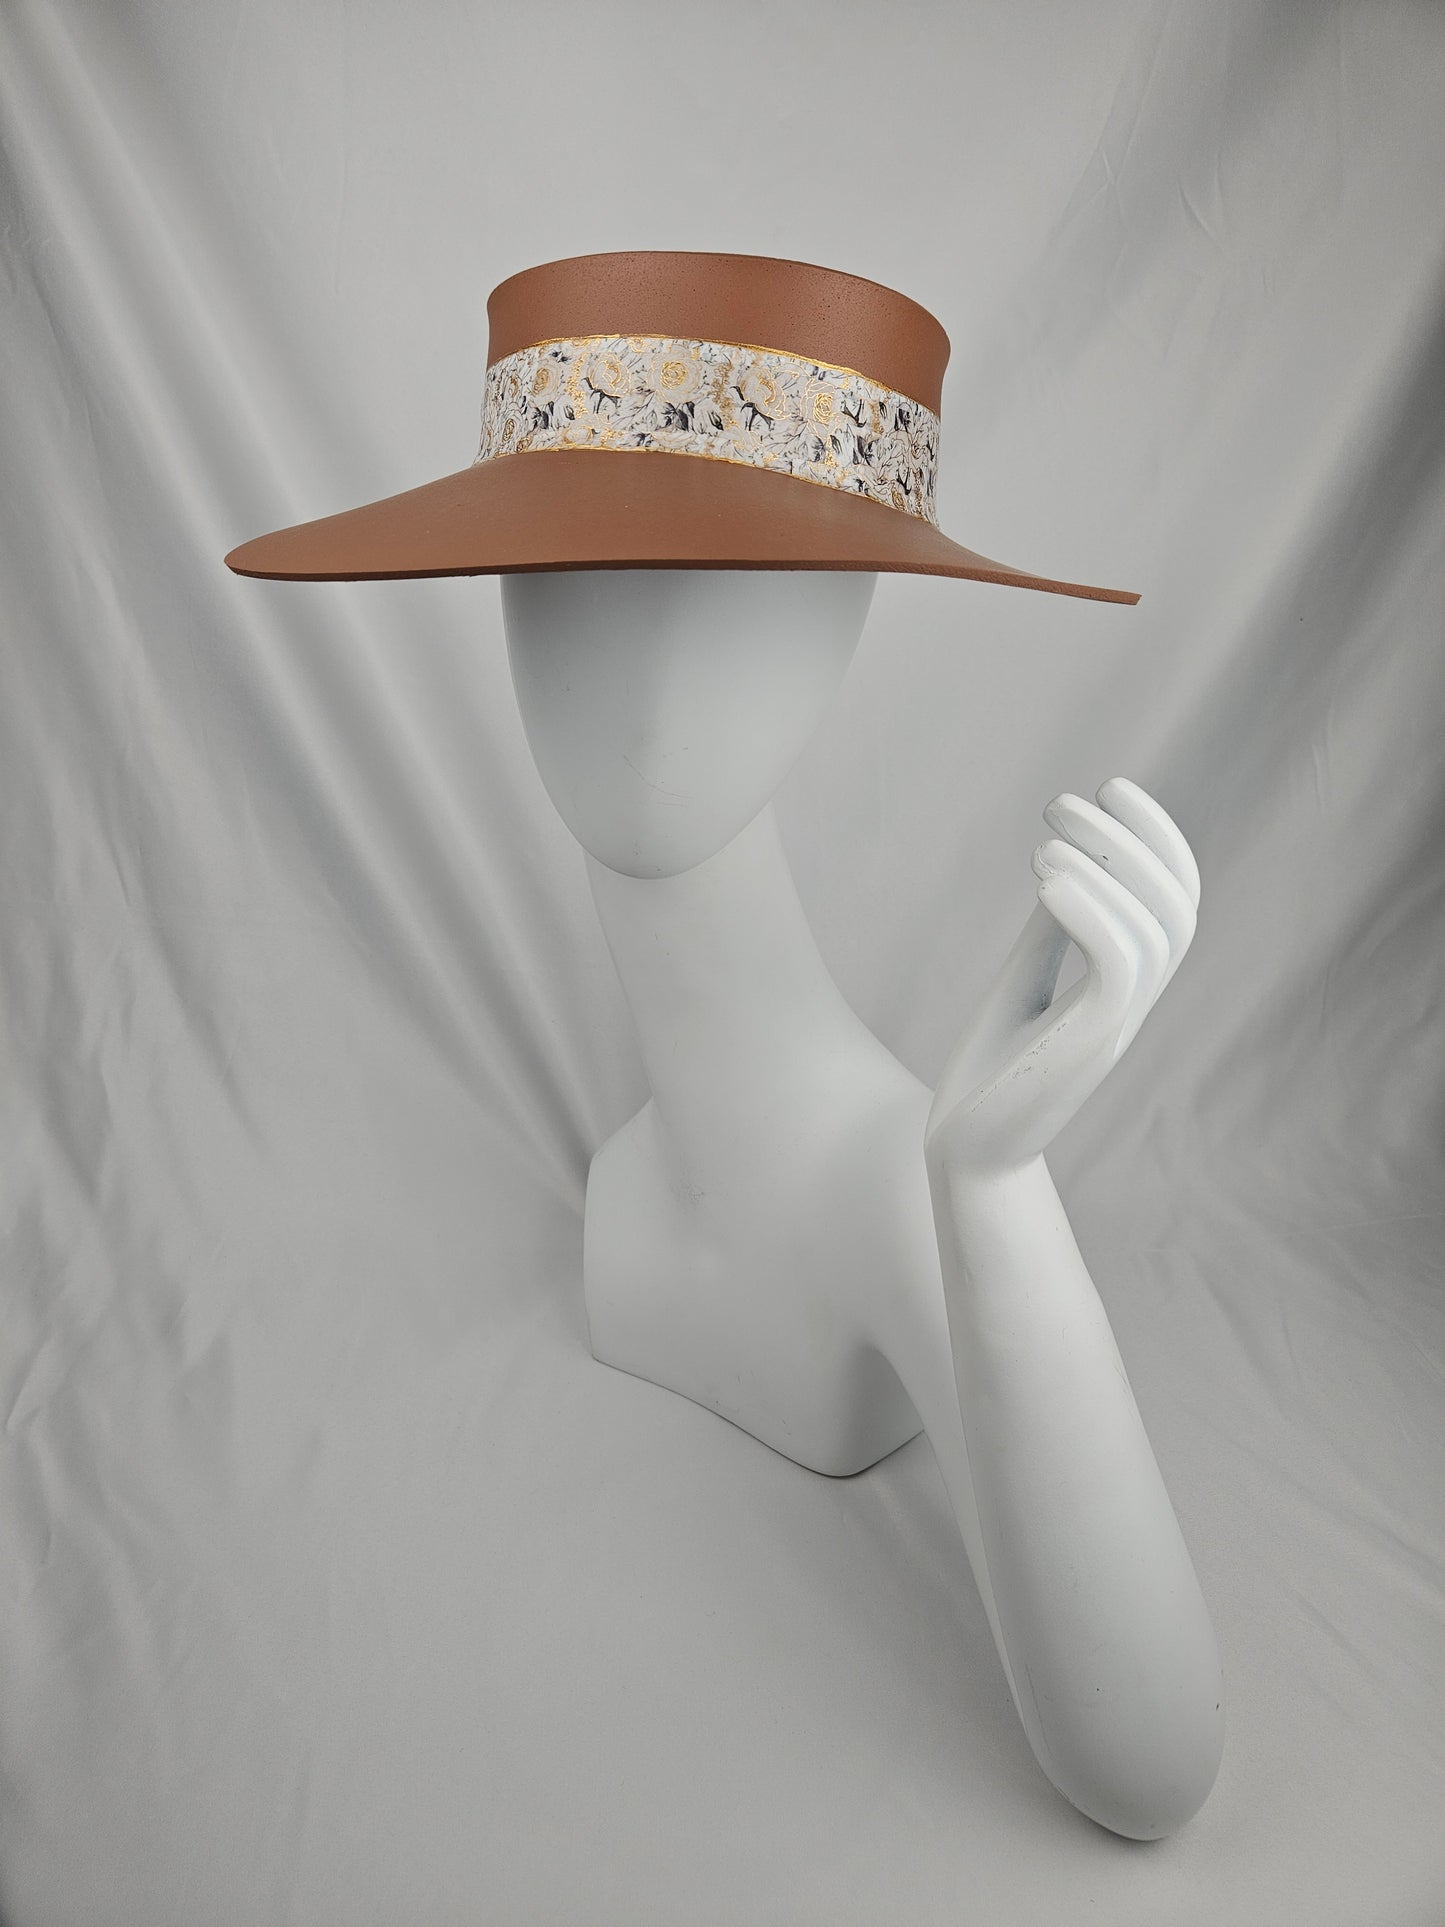 Caramel Brown Audrey Sun Visor Hat with White and Gold Floral Band: 1950s, Walks, Brunch, Tea, Golf, Wedding, Church, No Headache, Easter, Pool, Beach, Big Brim